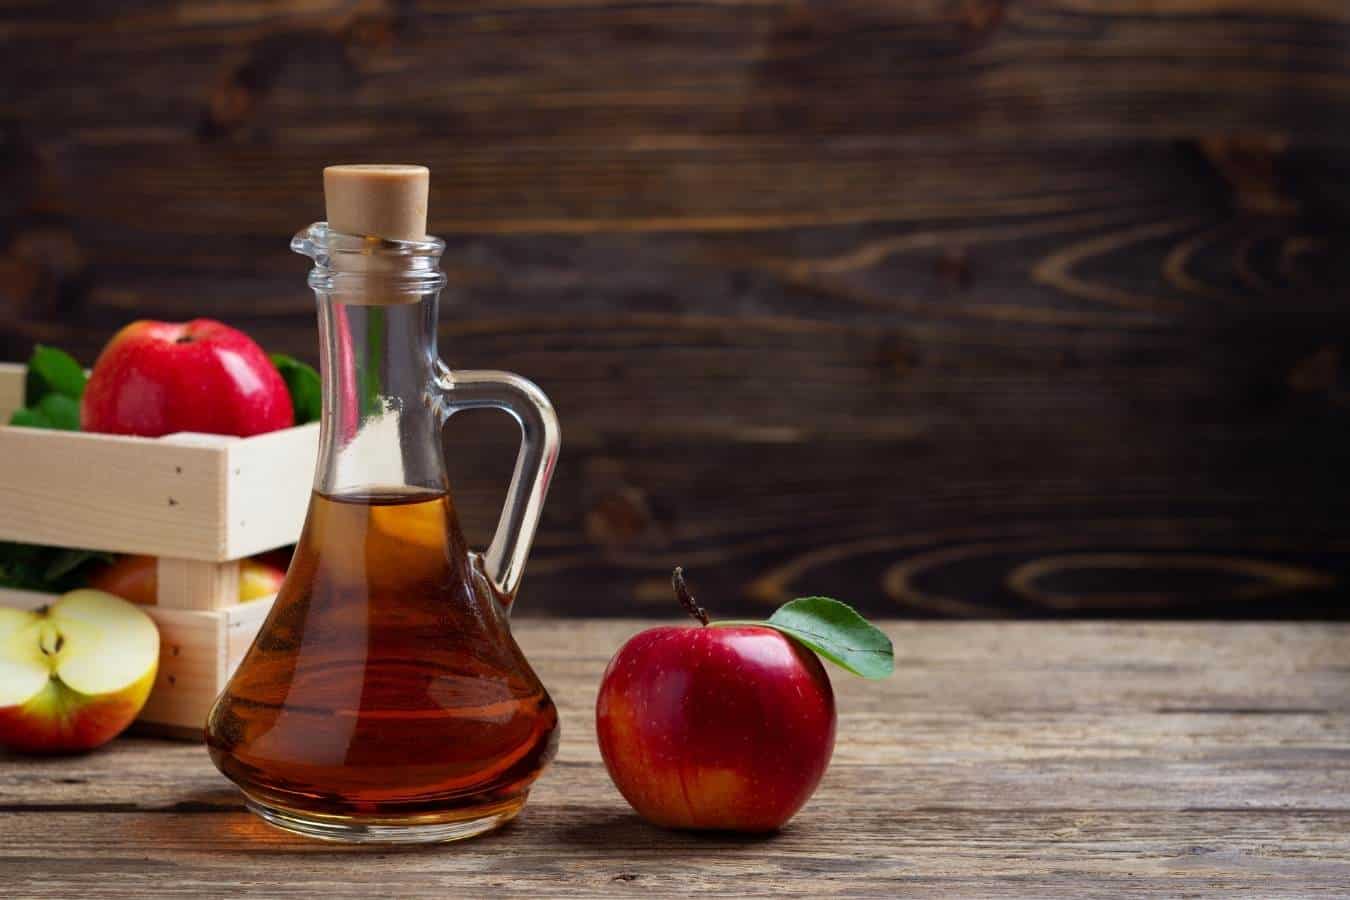 Can Apple Cider Vinegar Remove Black Hair Dye